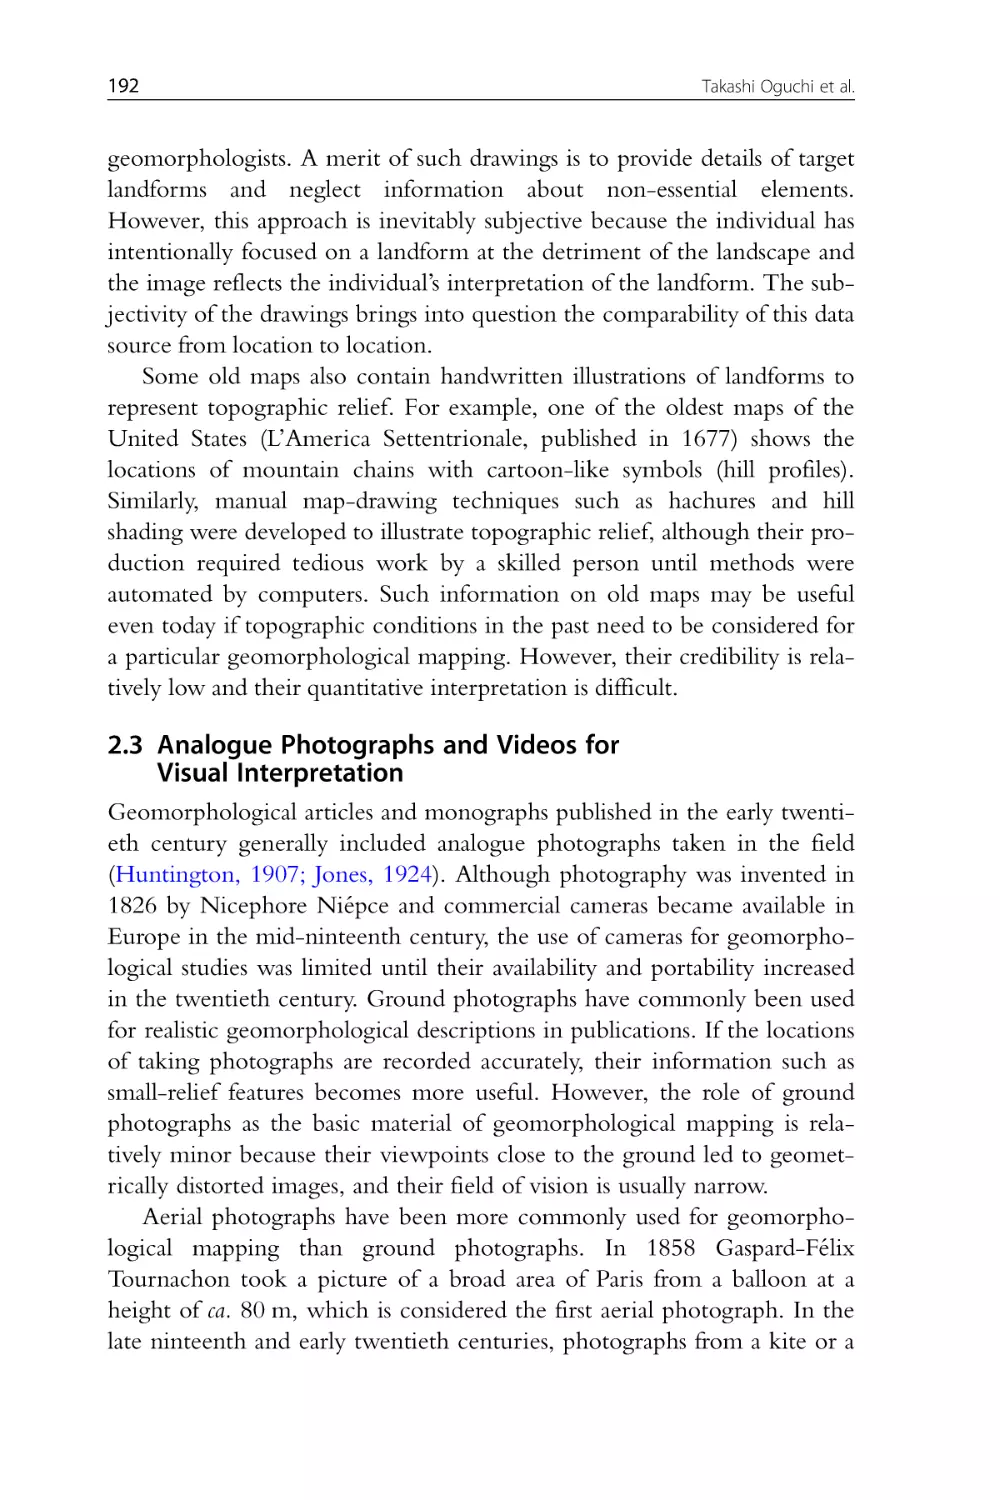 2.3 Analogue Photographs and Videos for Visual Interpretation